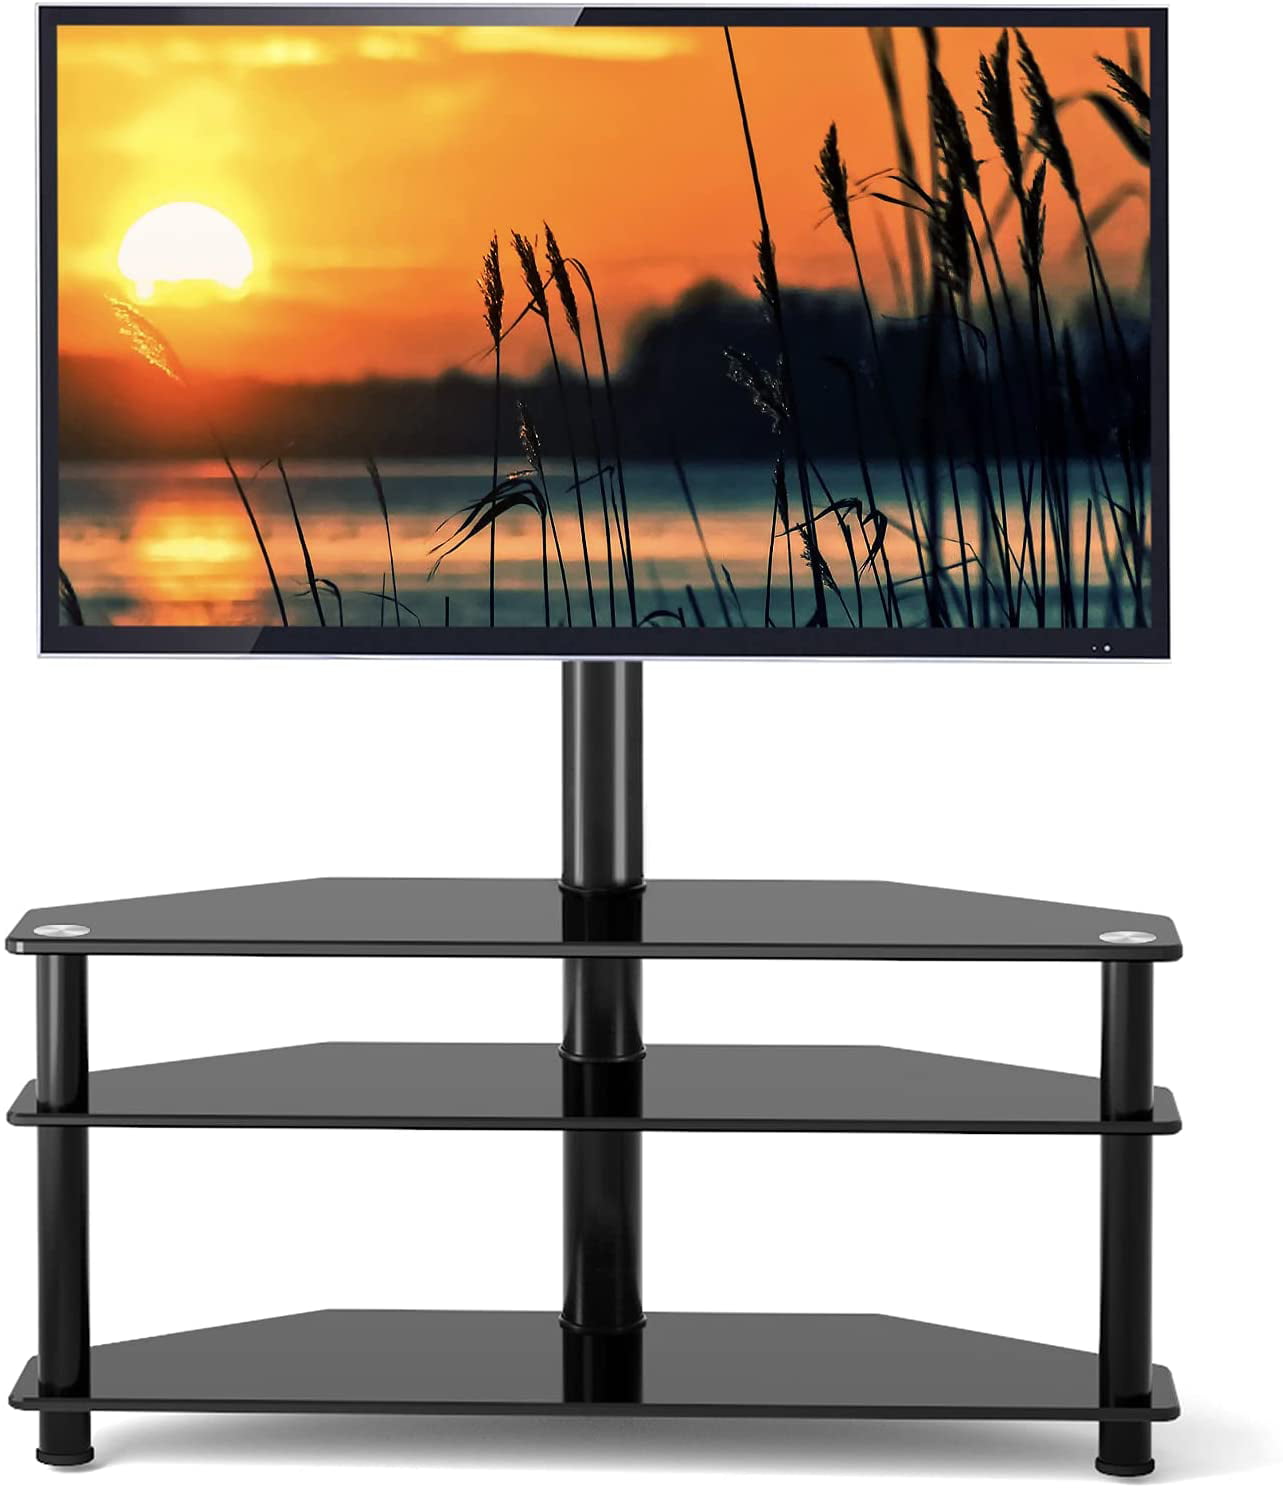 Heavy-Duty 3-Glass-Shelf TV Stand Cabinet Fits 32"-70" LED LCD OLED Plasma TVs 